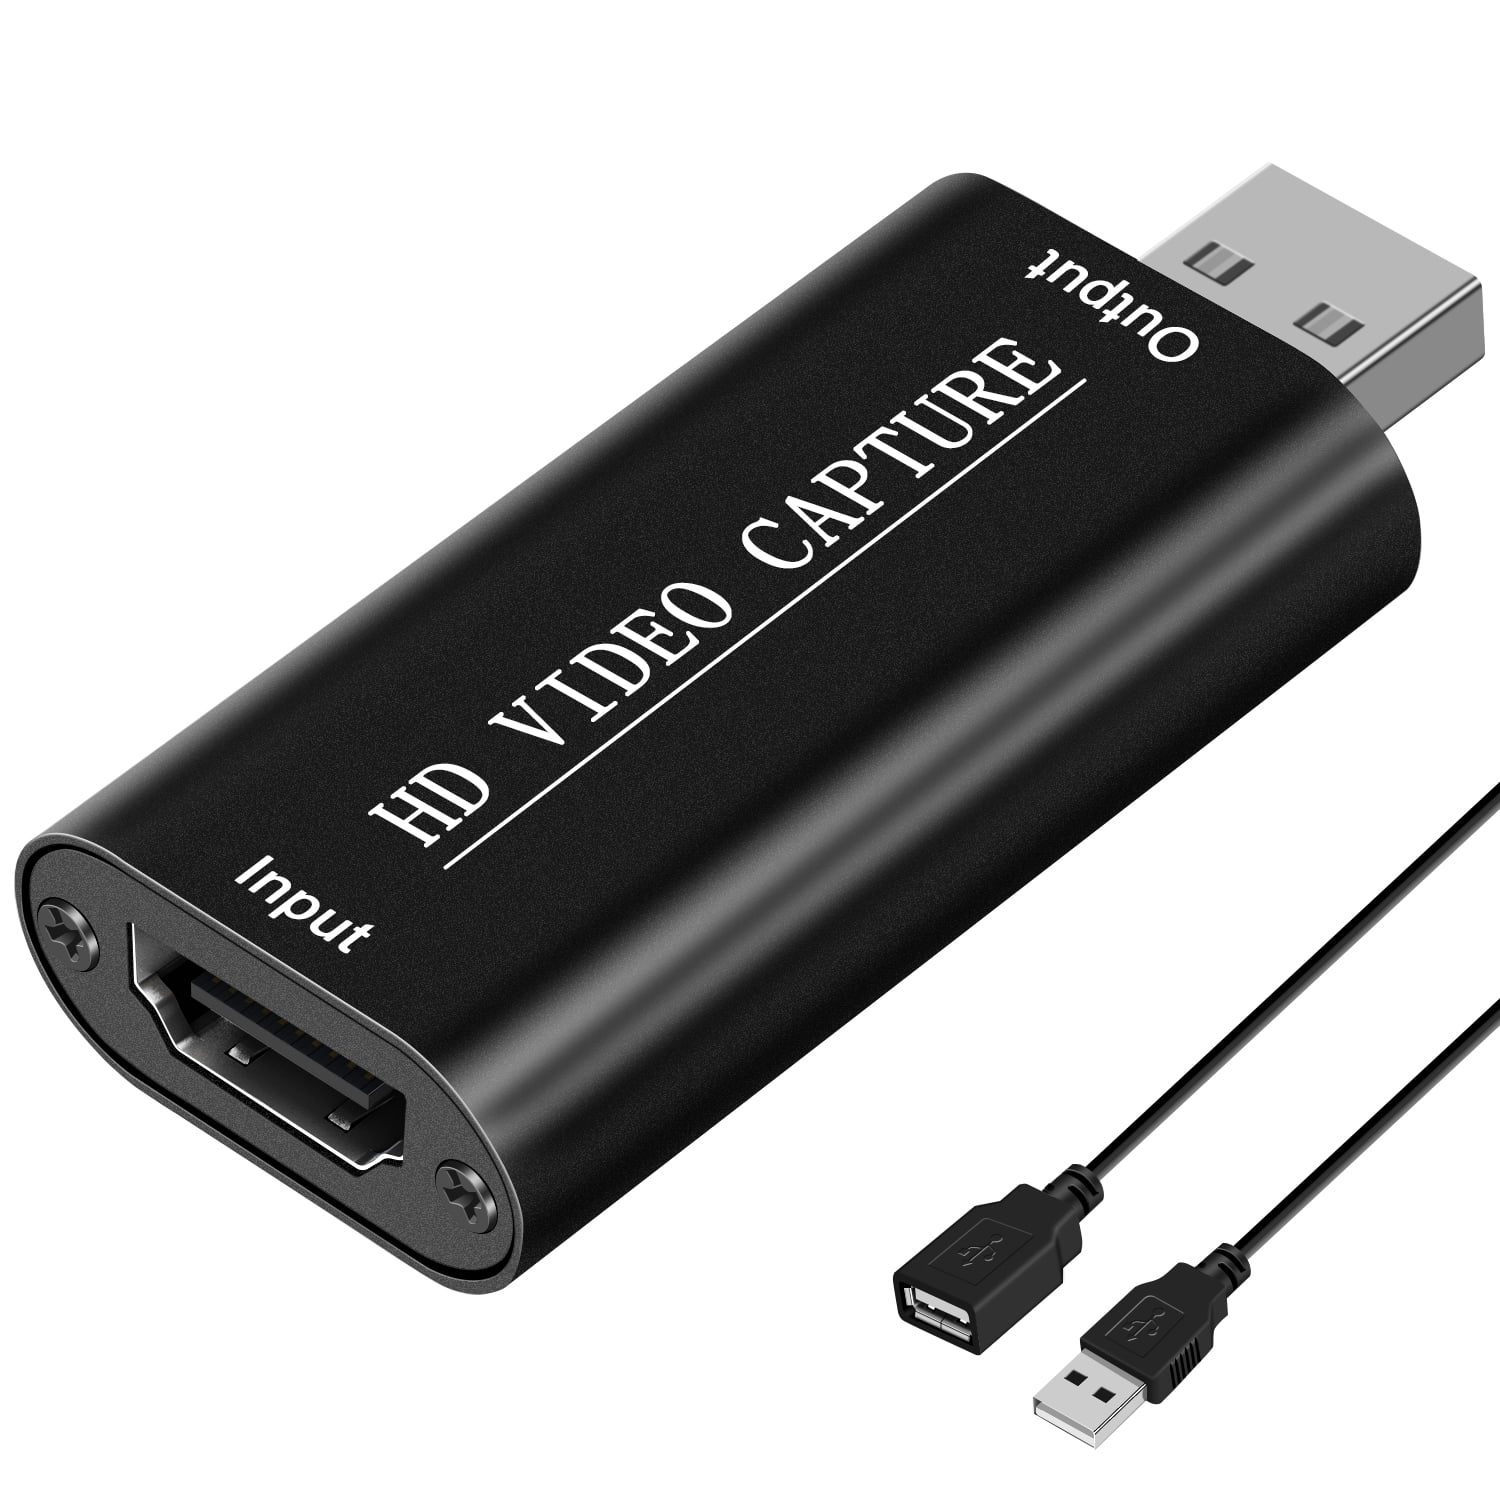 BlueAVS HDMI to USB Video Capture Card 1080P for Live Video Streaming  Record via DSLR Camcorder Action Cam - Capture 1080P@30Hz (Metal-Black)